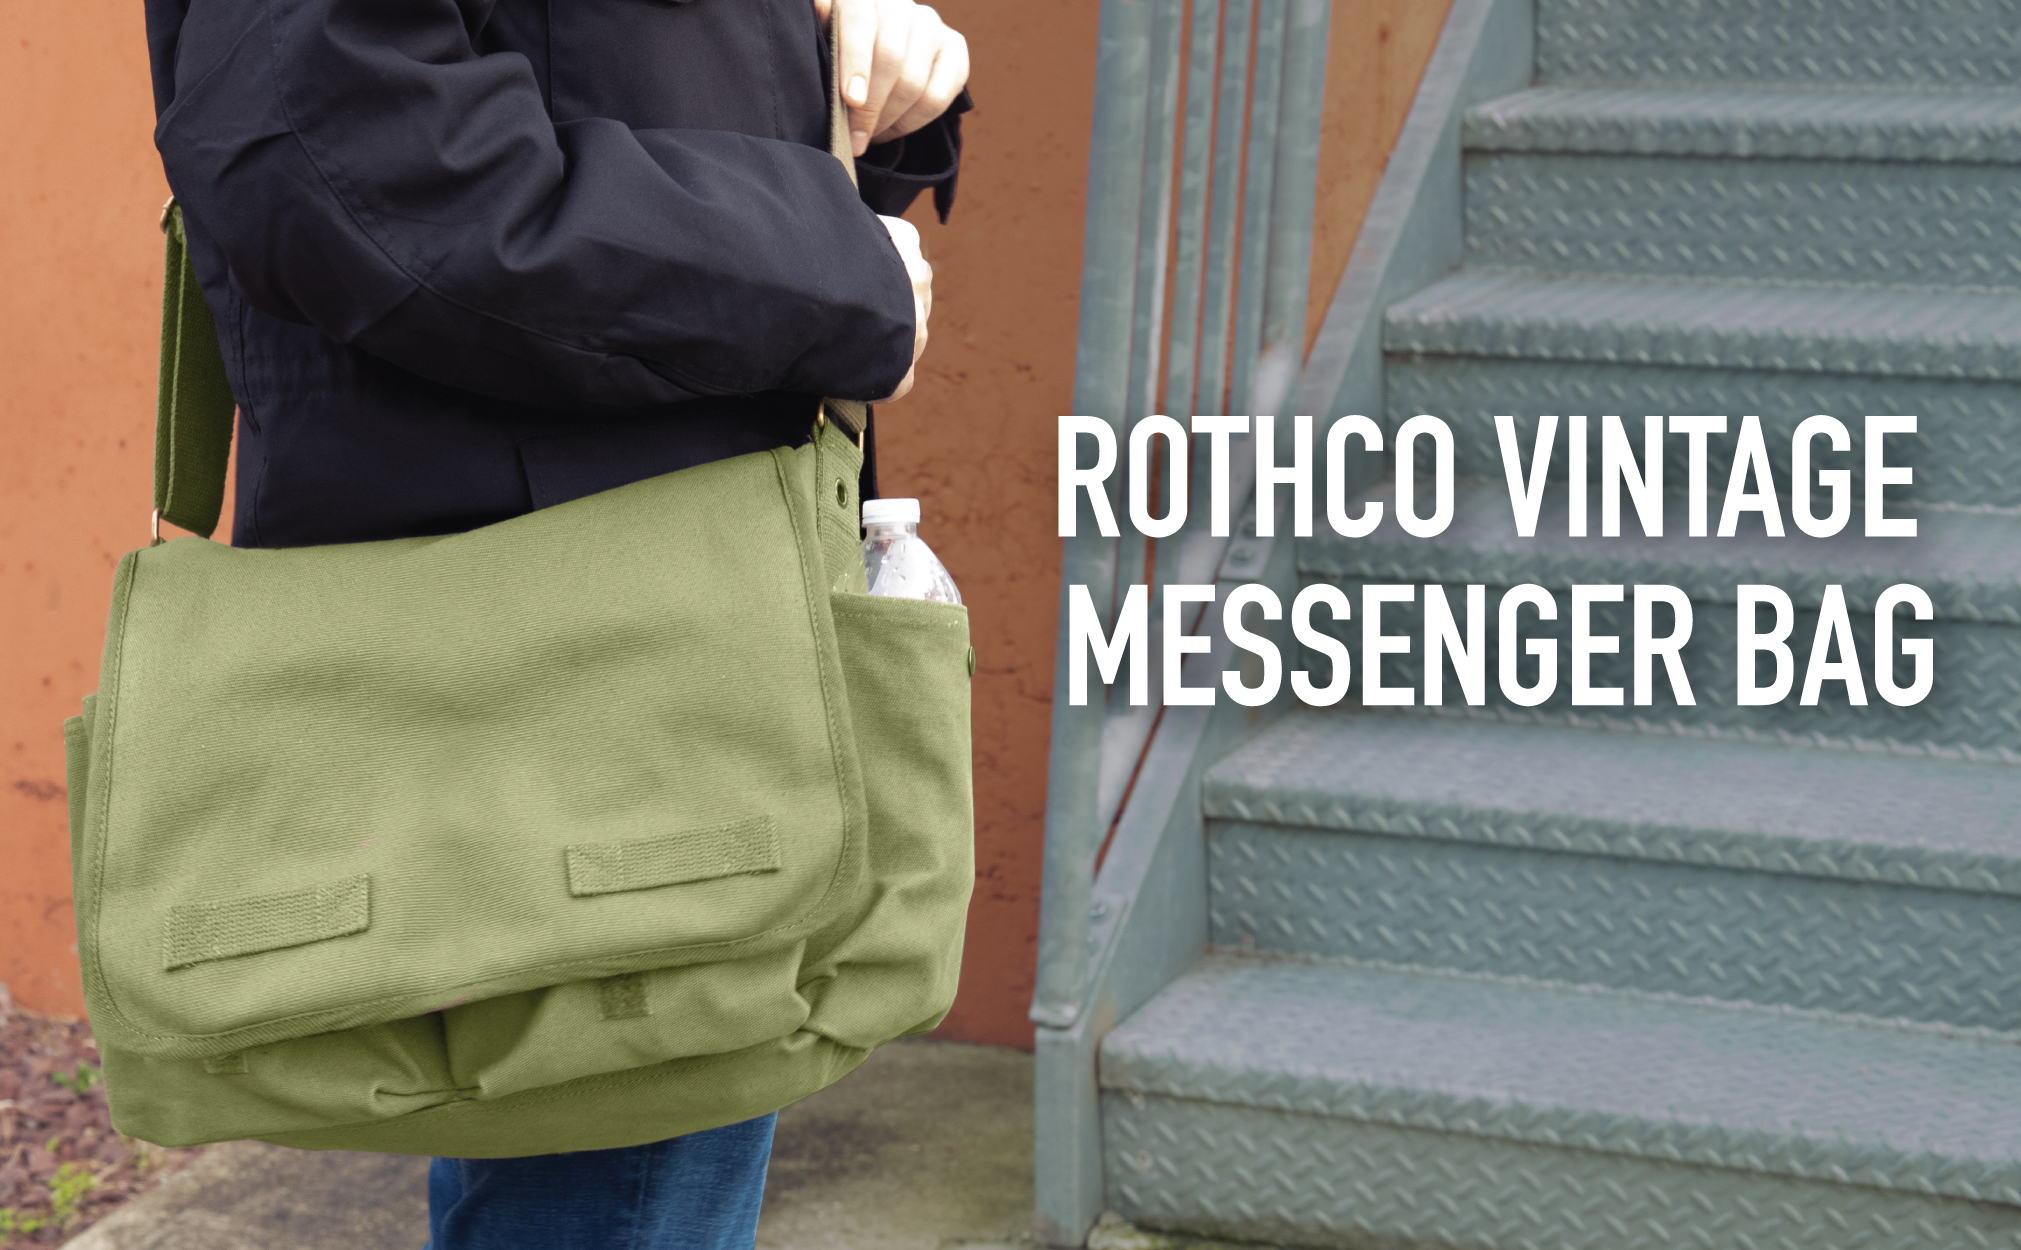 Rothco Classic Canvas Messenger Bag, Olive Drab - image 3 of 3